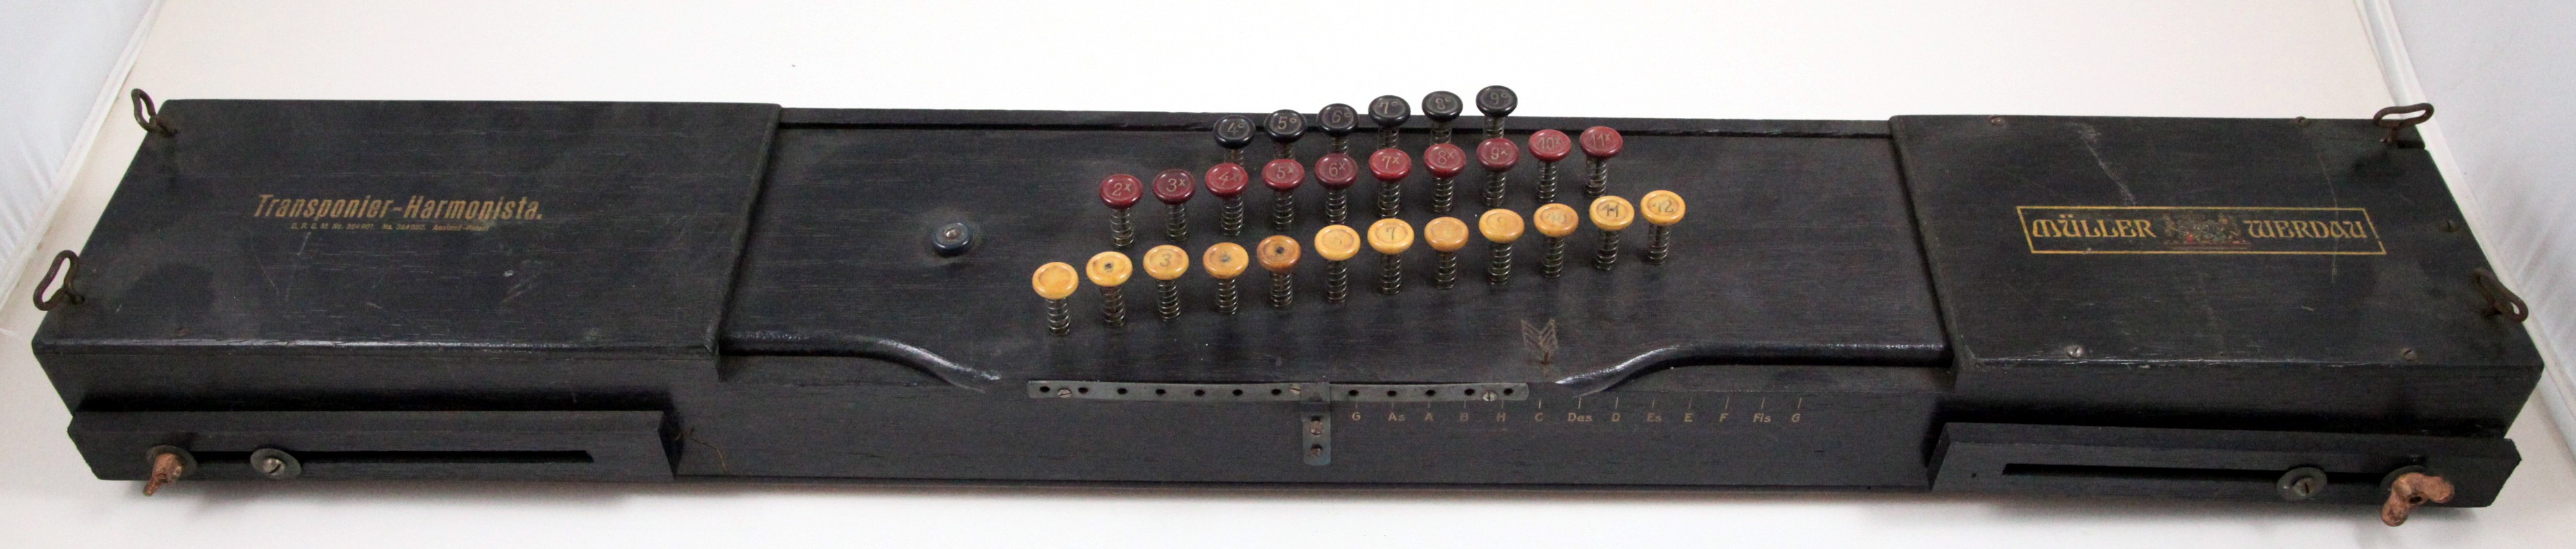 Transponiergerät & Spielhilfe für Harmonium (Hellweg-Museum Unna CC BY-NC-SA)